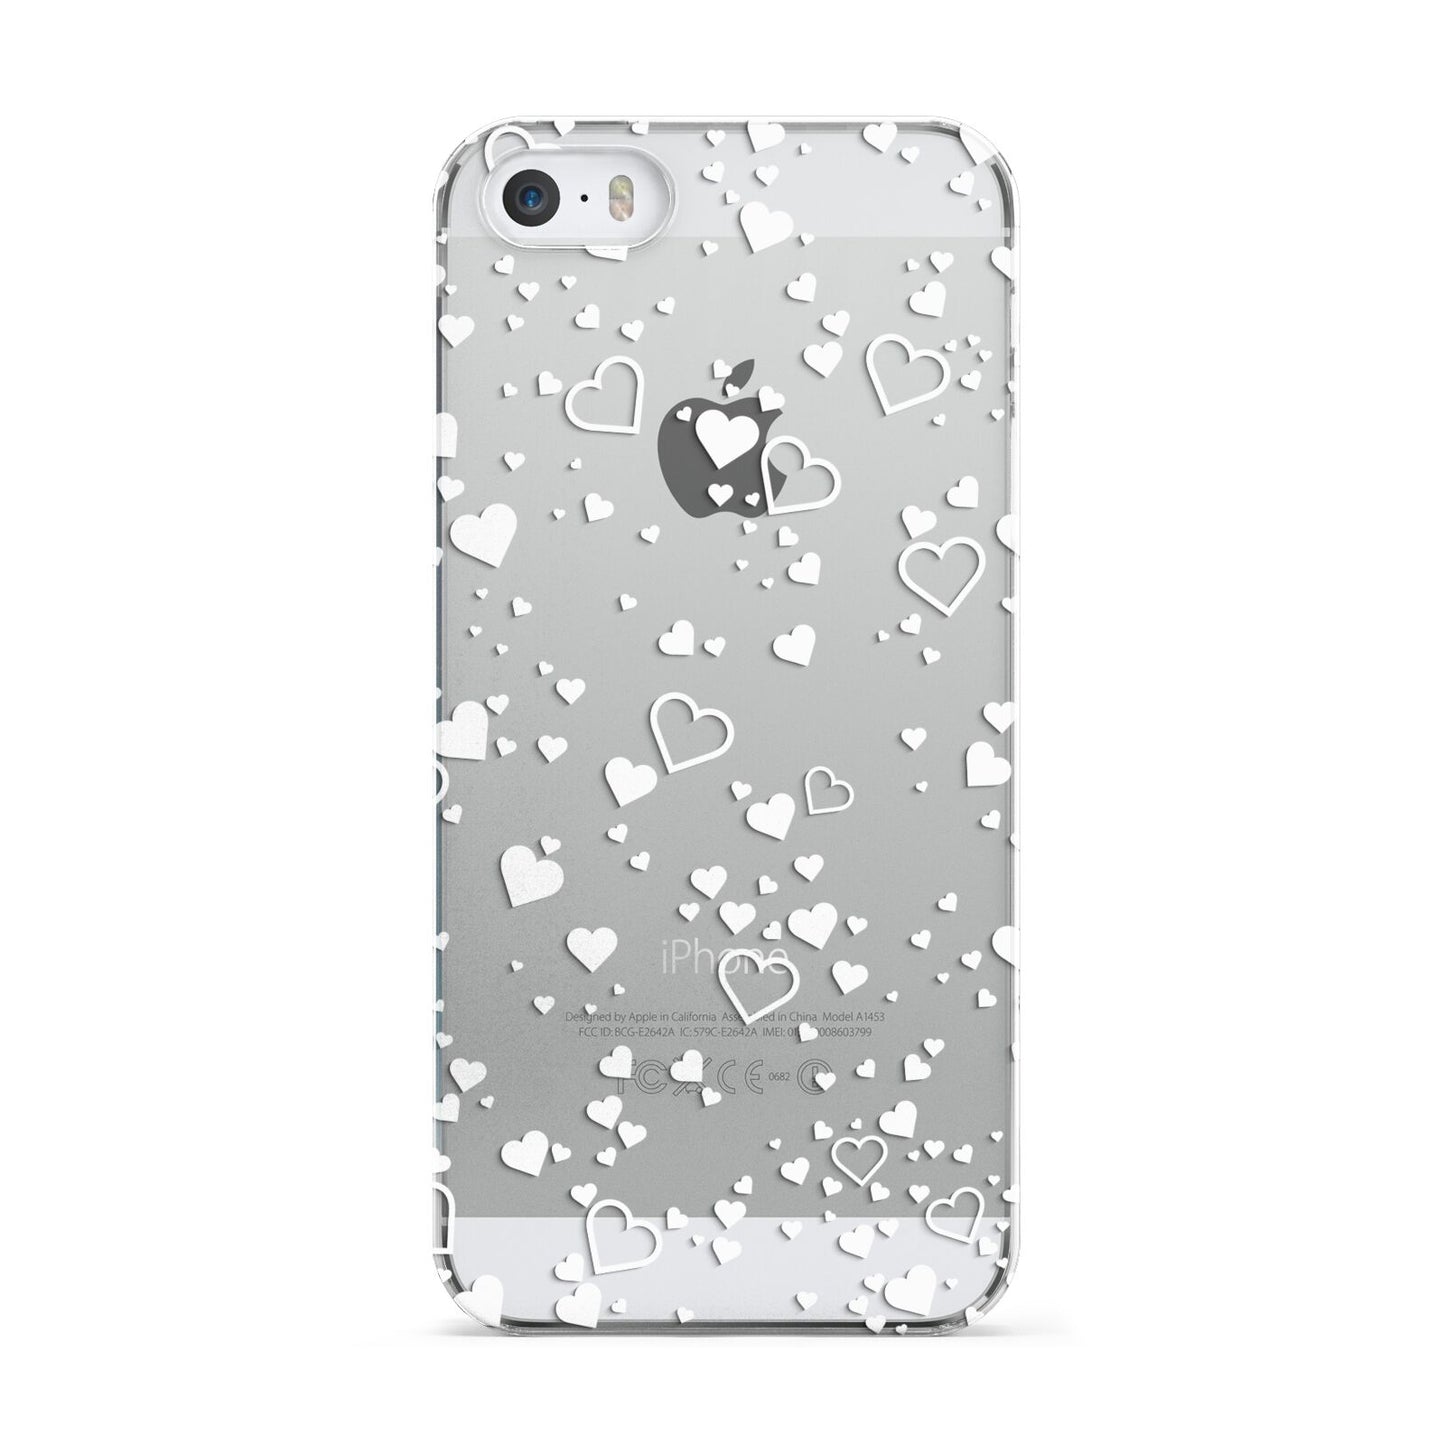 White Heart Apple iPhone 5 Case